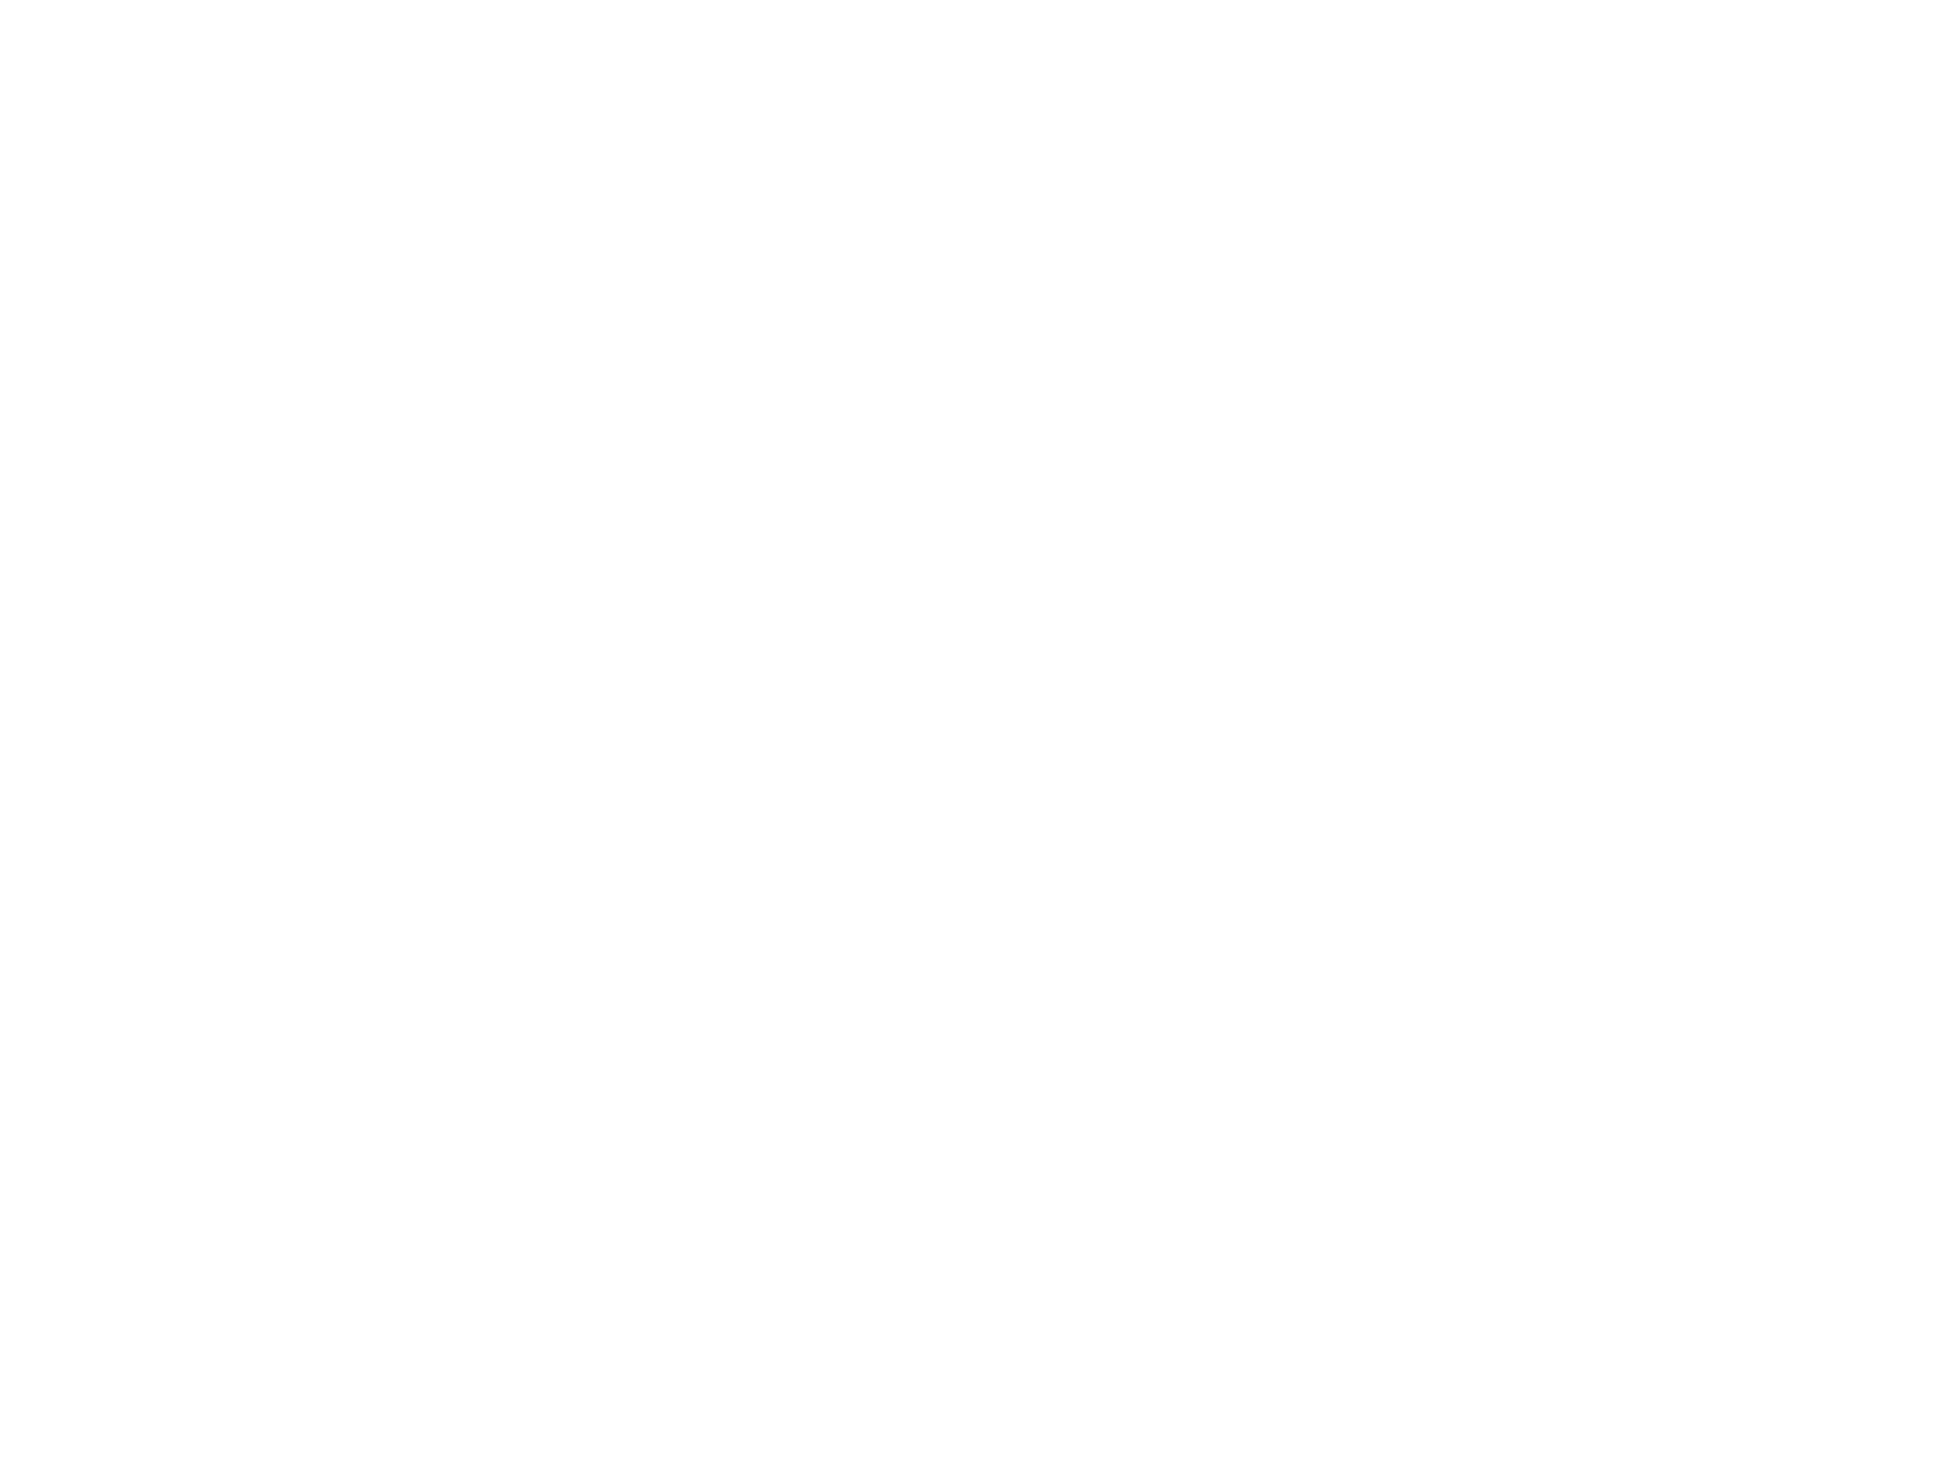 Webwiskee logo